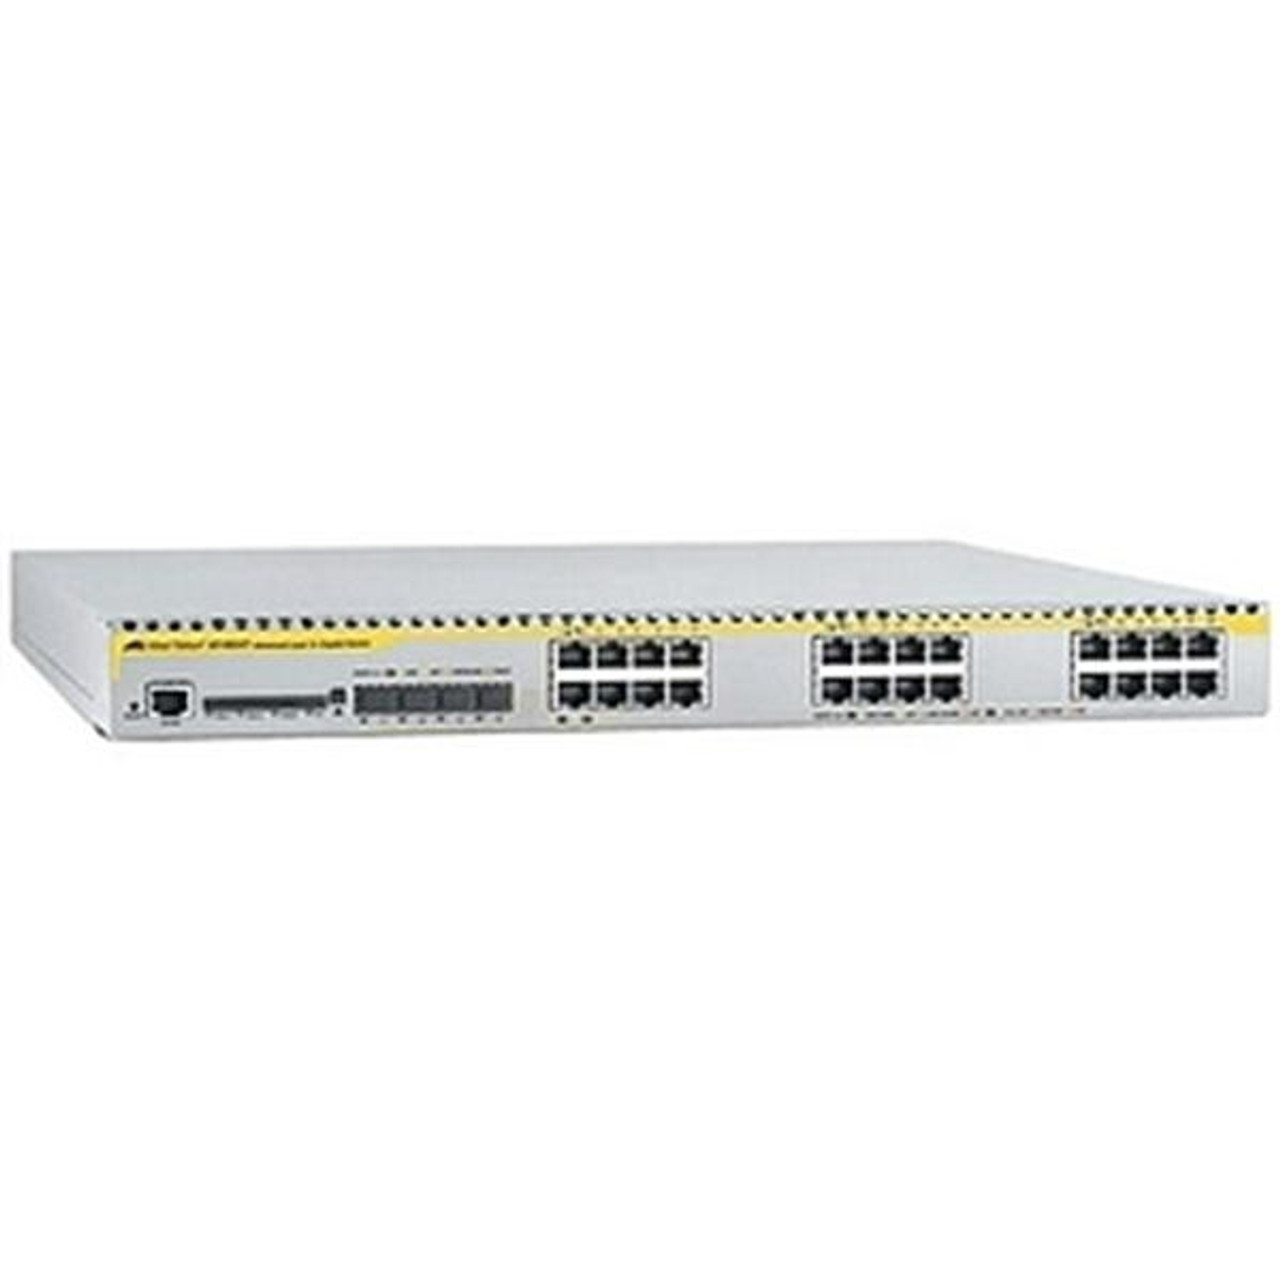 AT-9924TSI-10 Allied Telesis AT-9924TSI Ethernet Routing Switch 24 x 10/100/1000Base-T LAN (Refurbished)